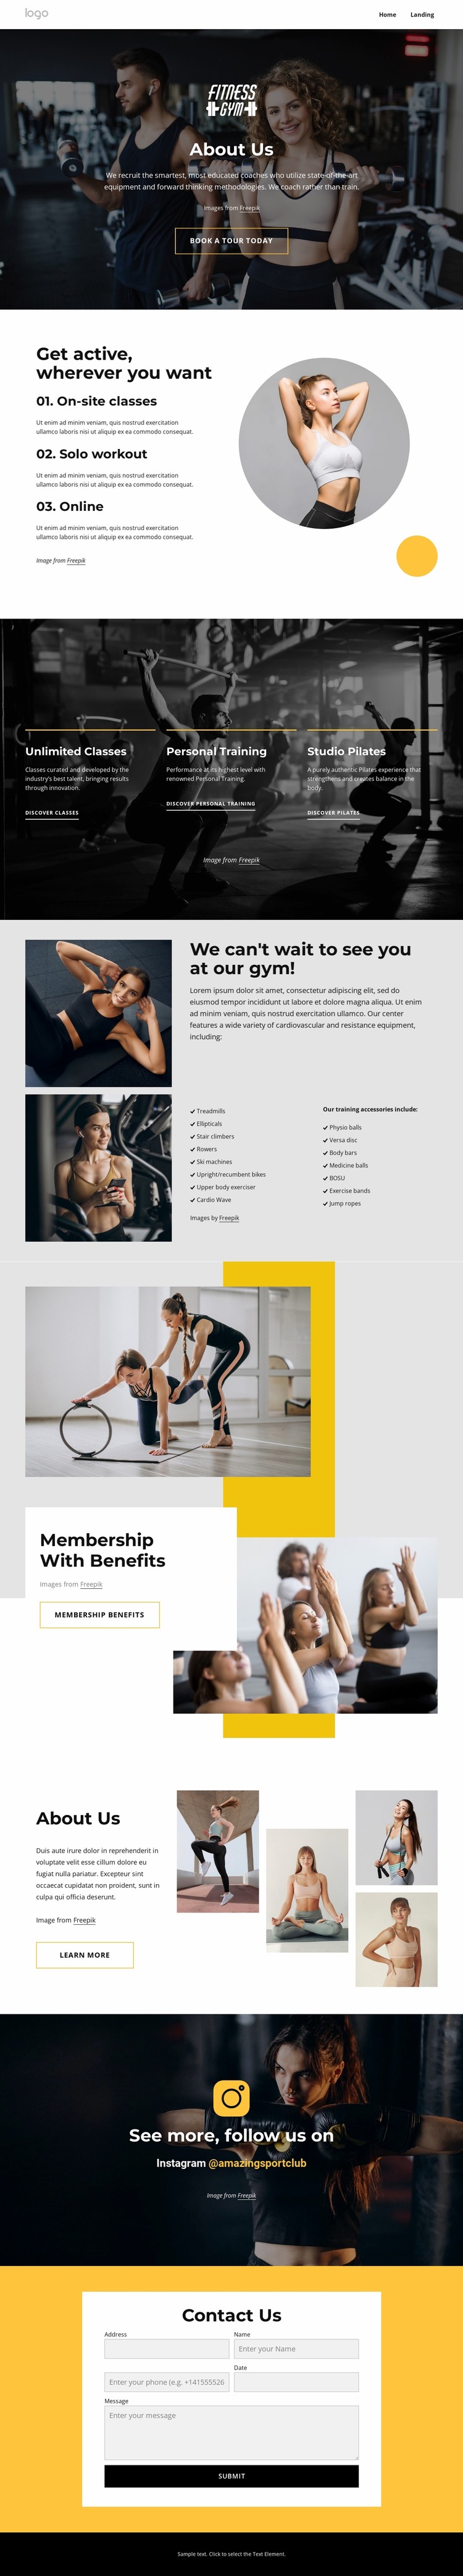 Sport and wellness center Website Mockup